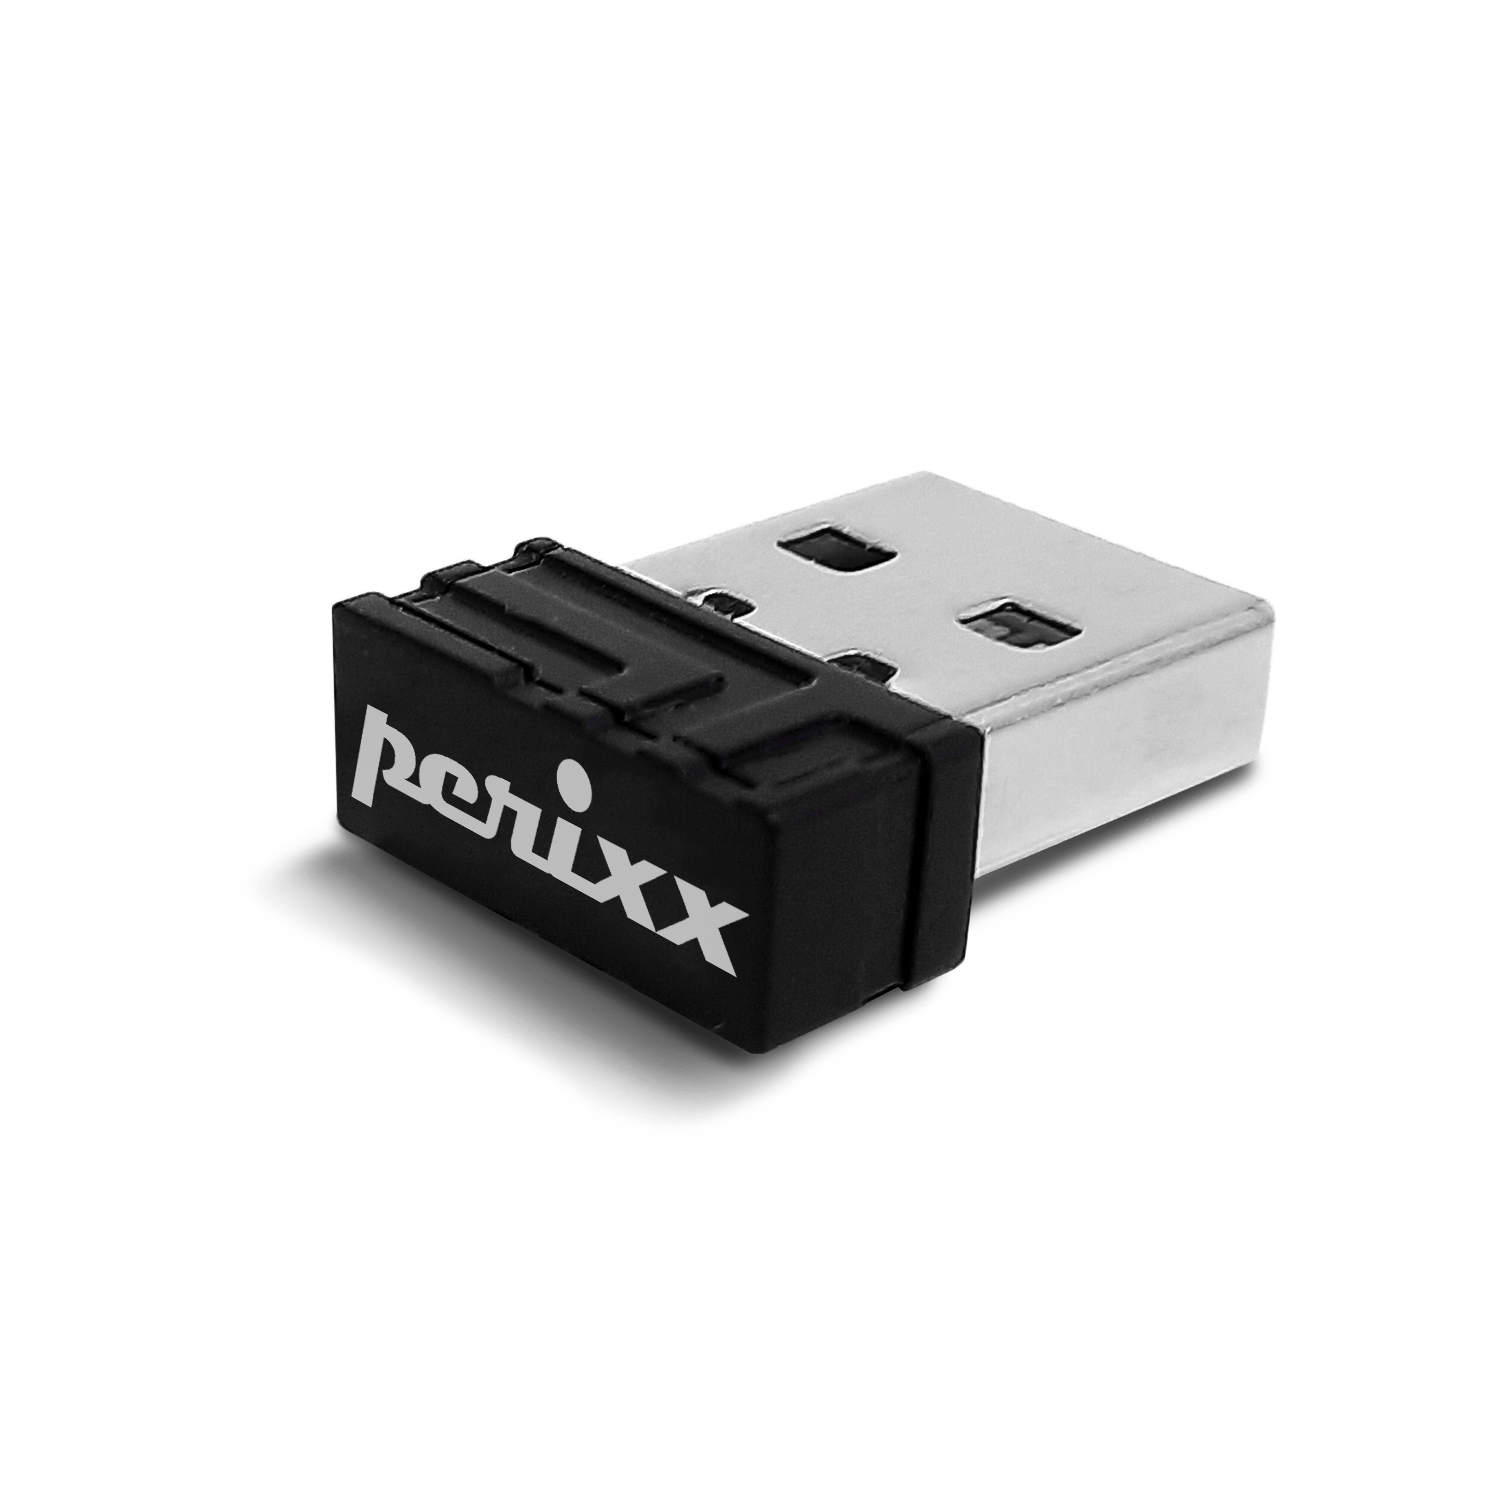 USB dongle receiver for PERIMICE-715II - Perixx Europe